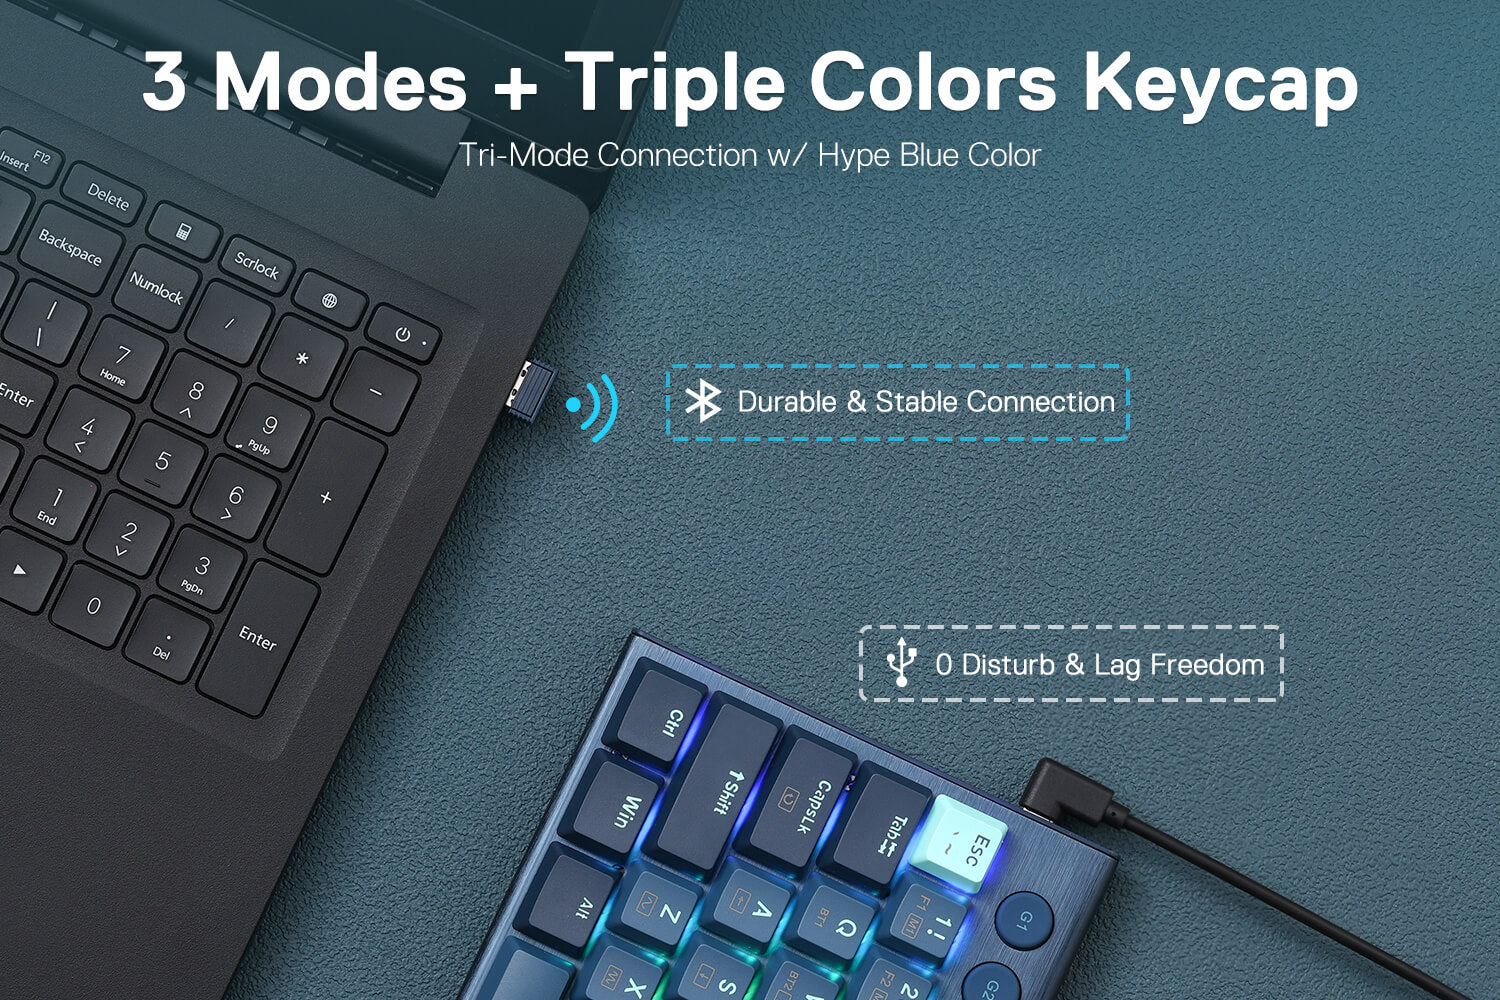 Redragon K632 PRO Noctis 60% Wireless RGB Mechanical Keyboard